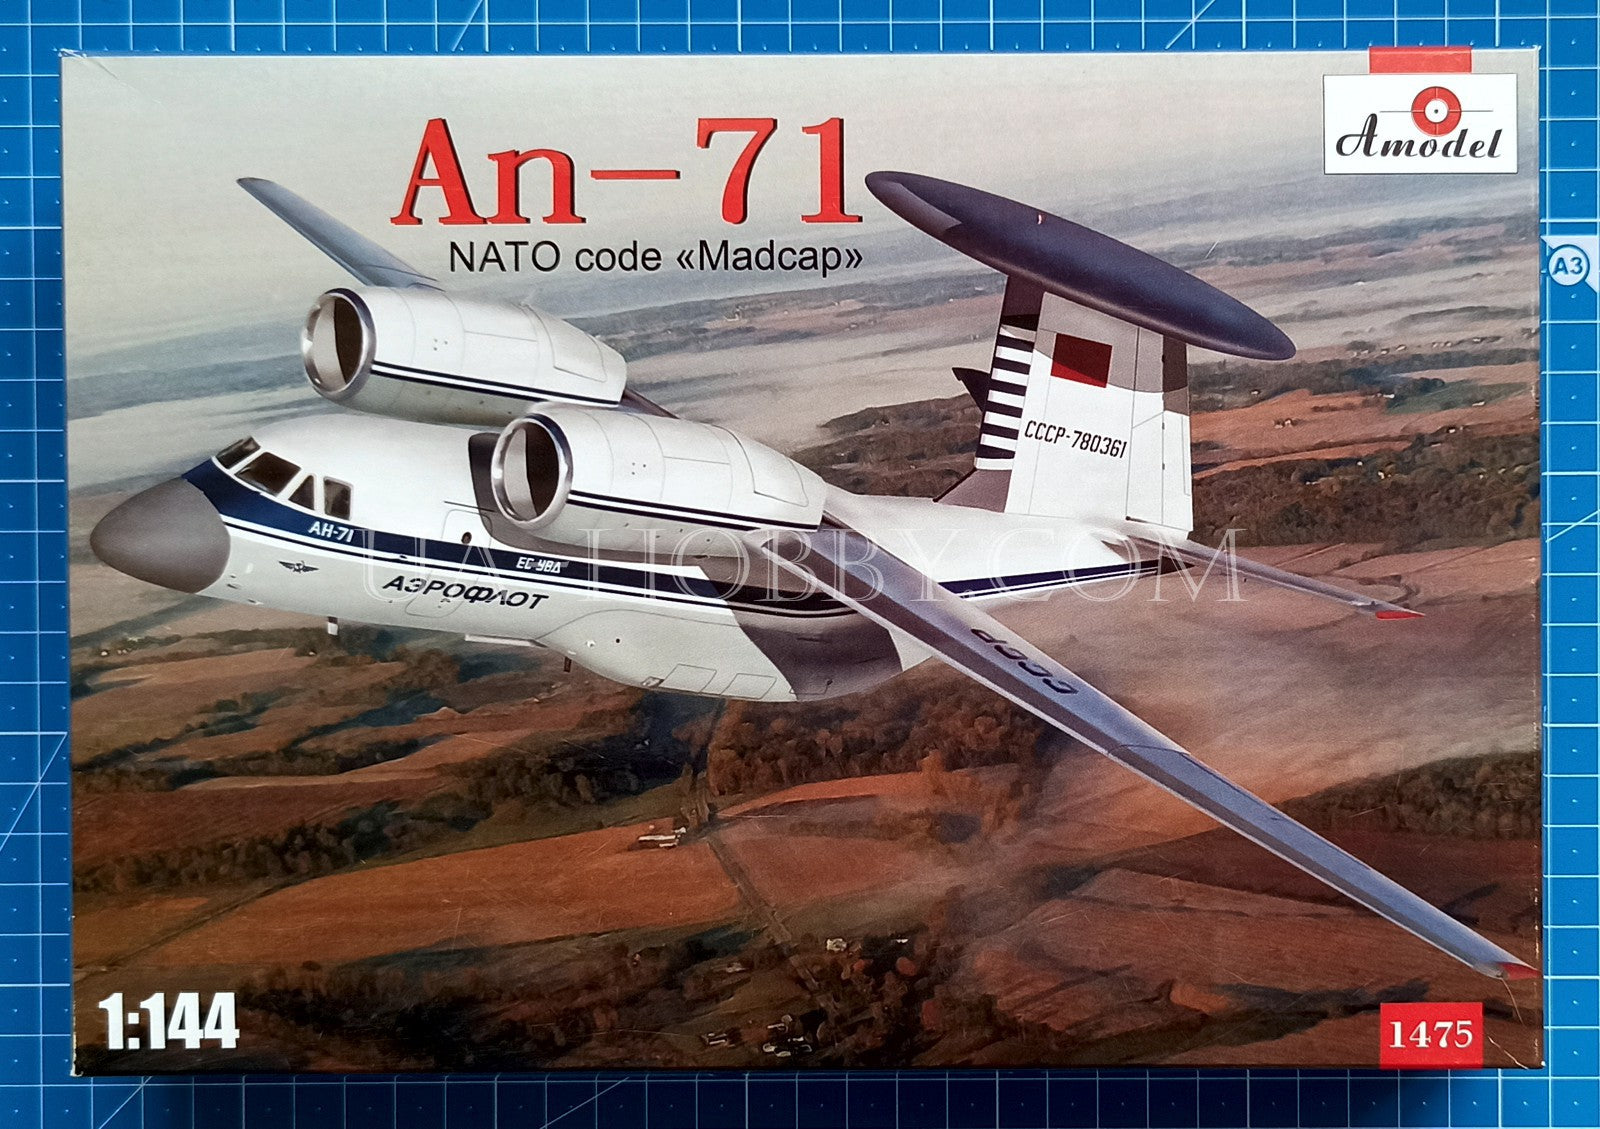 1/144 Antonov An-71 Madcap AEW aircraft. Amodel 1475